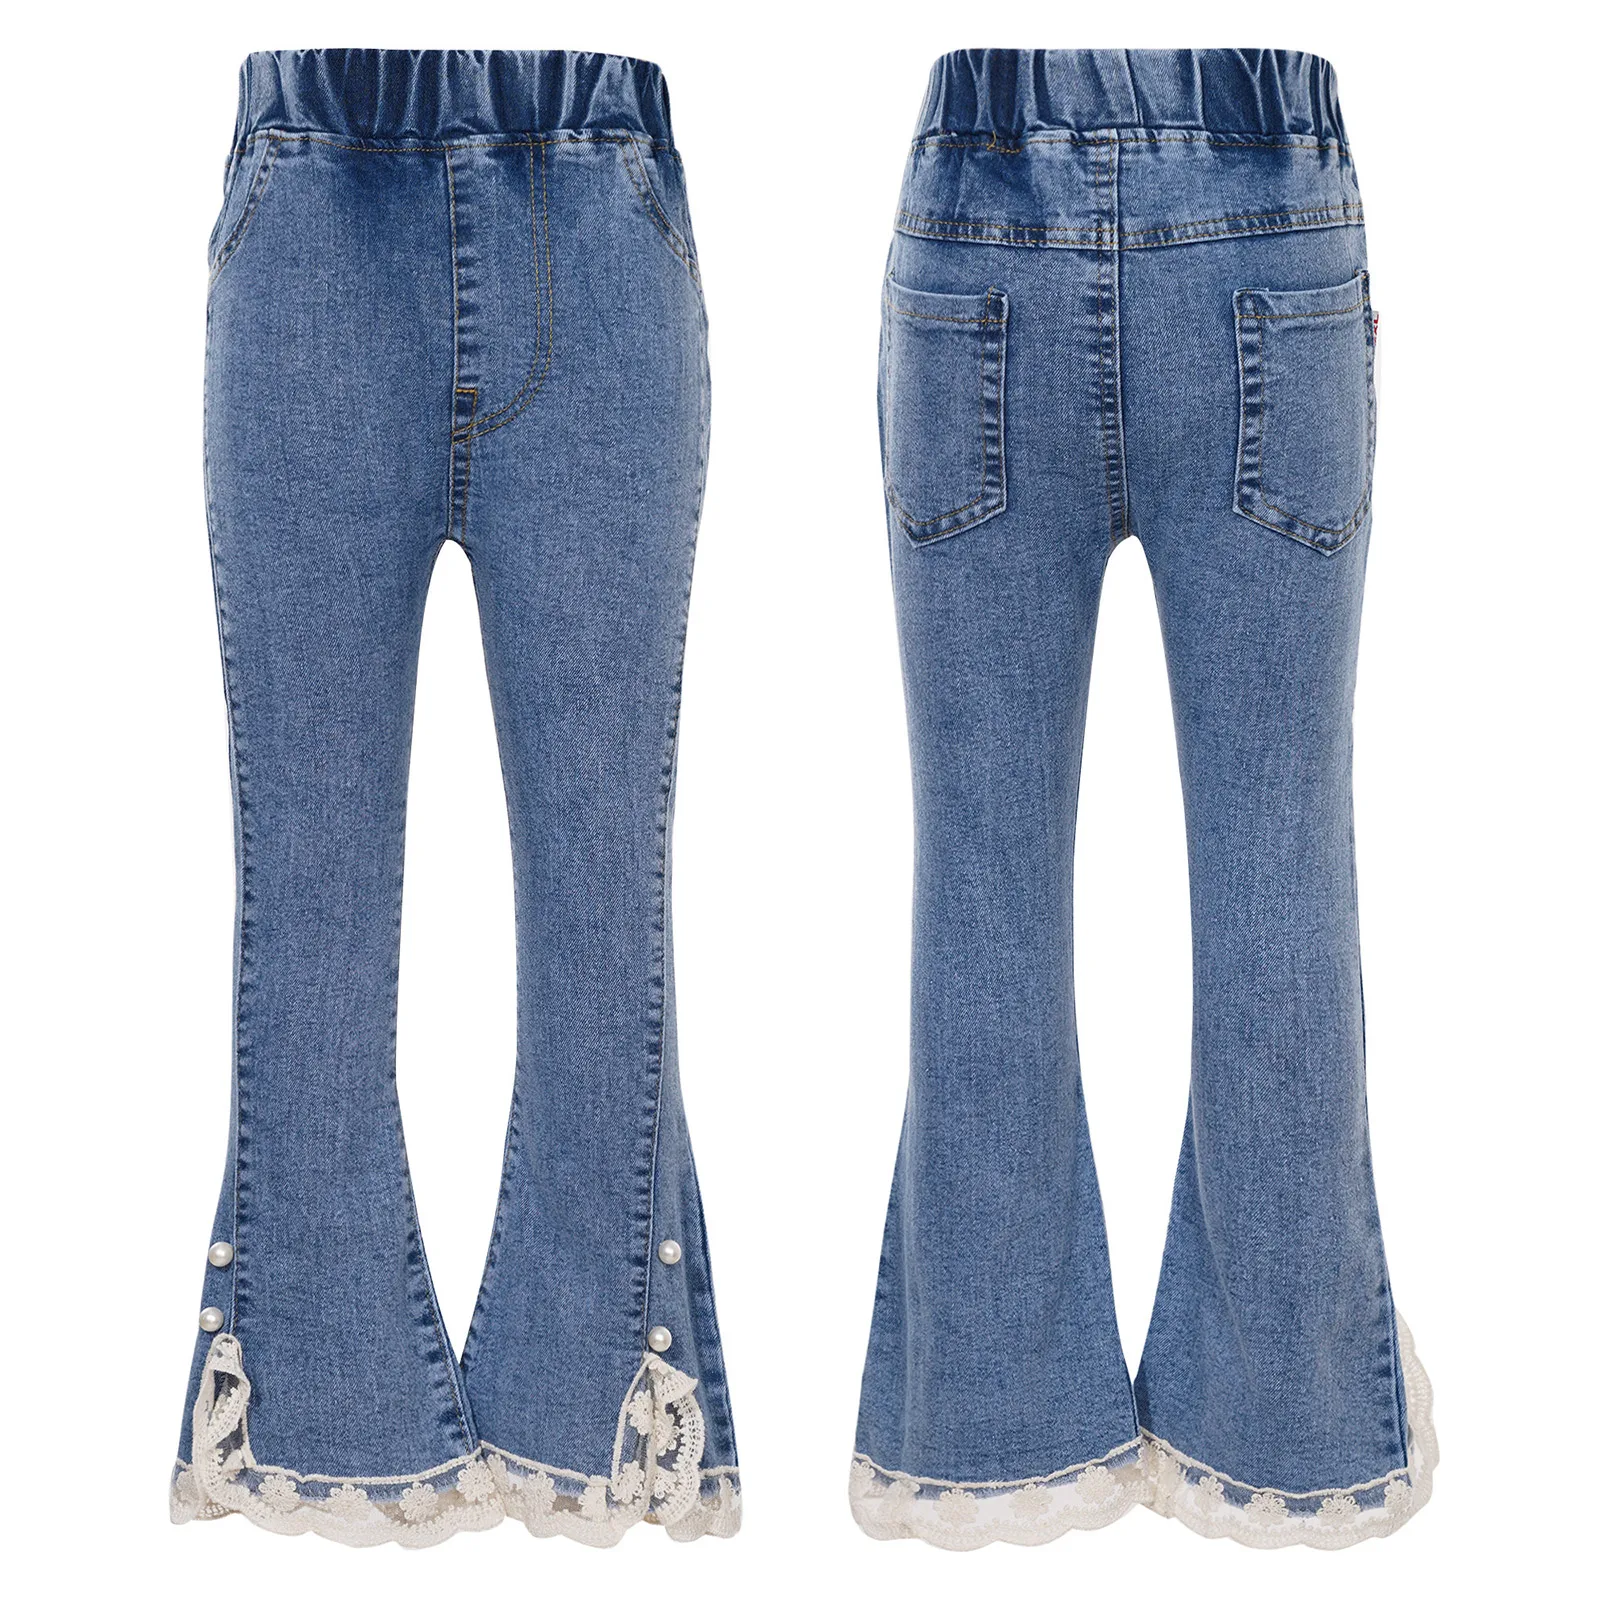 

Kids Girls Flared Jeans Pants Spring Autumn Slit Lace Hem Elastic Waistband Bell-Bottom Denim Pants Children Casual Clothes